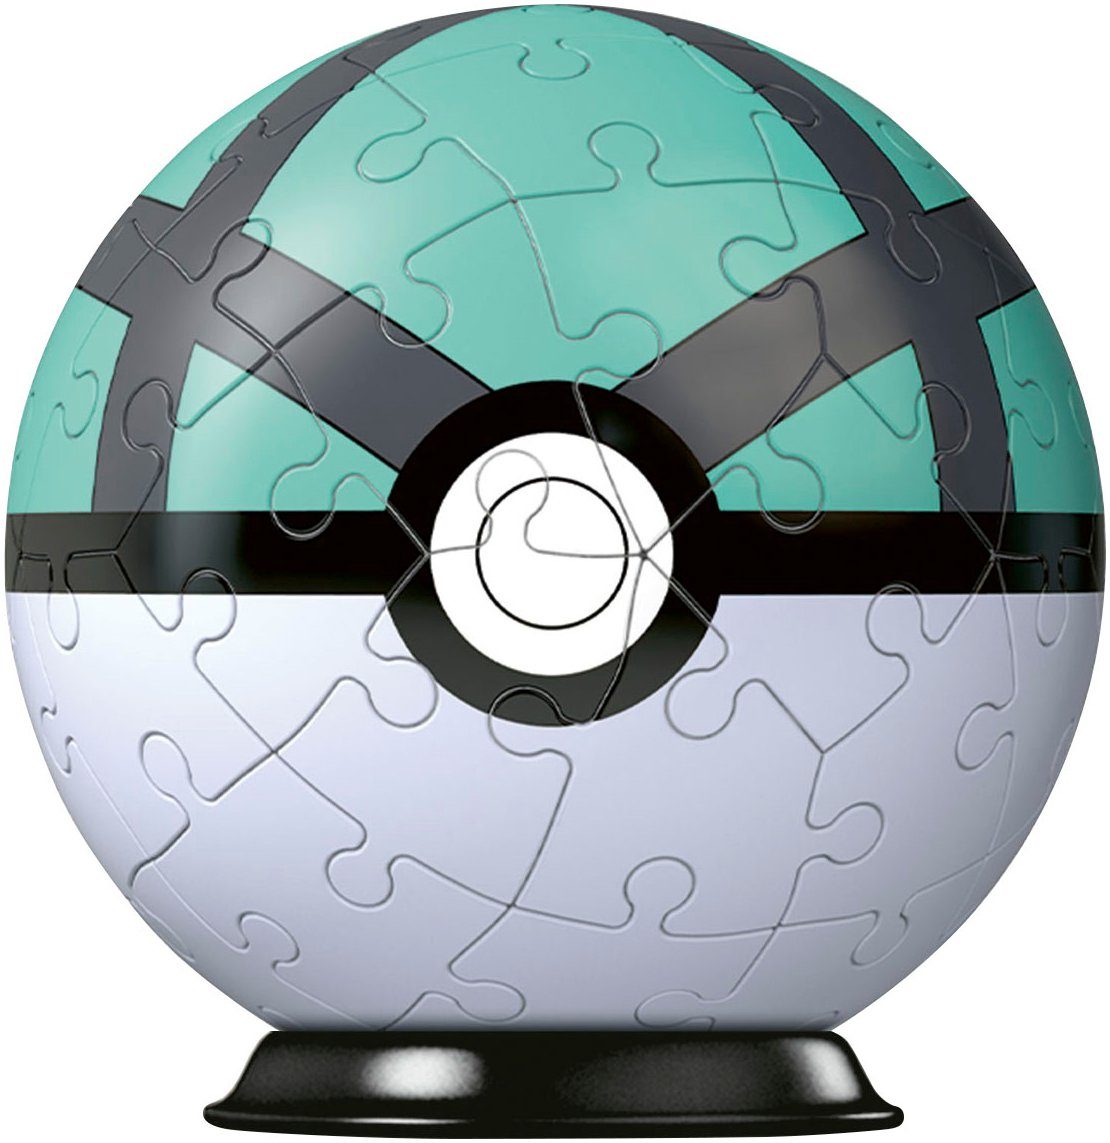 Ravensburger 3D-Puzzle Puzzle-Ball Pokémon Netzball, 54 Puzzleteile, Made in Europe